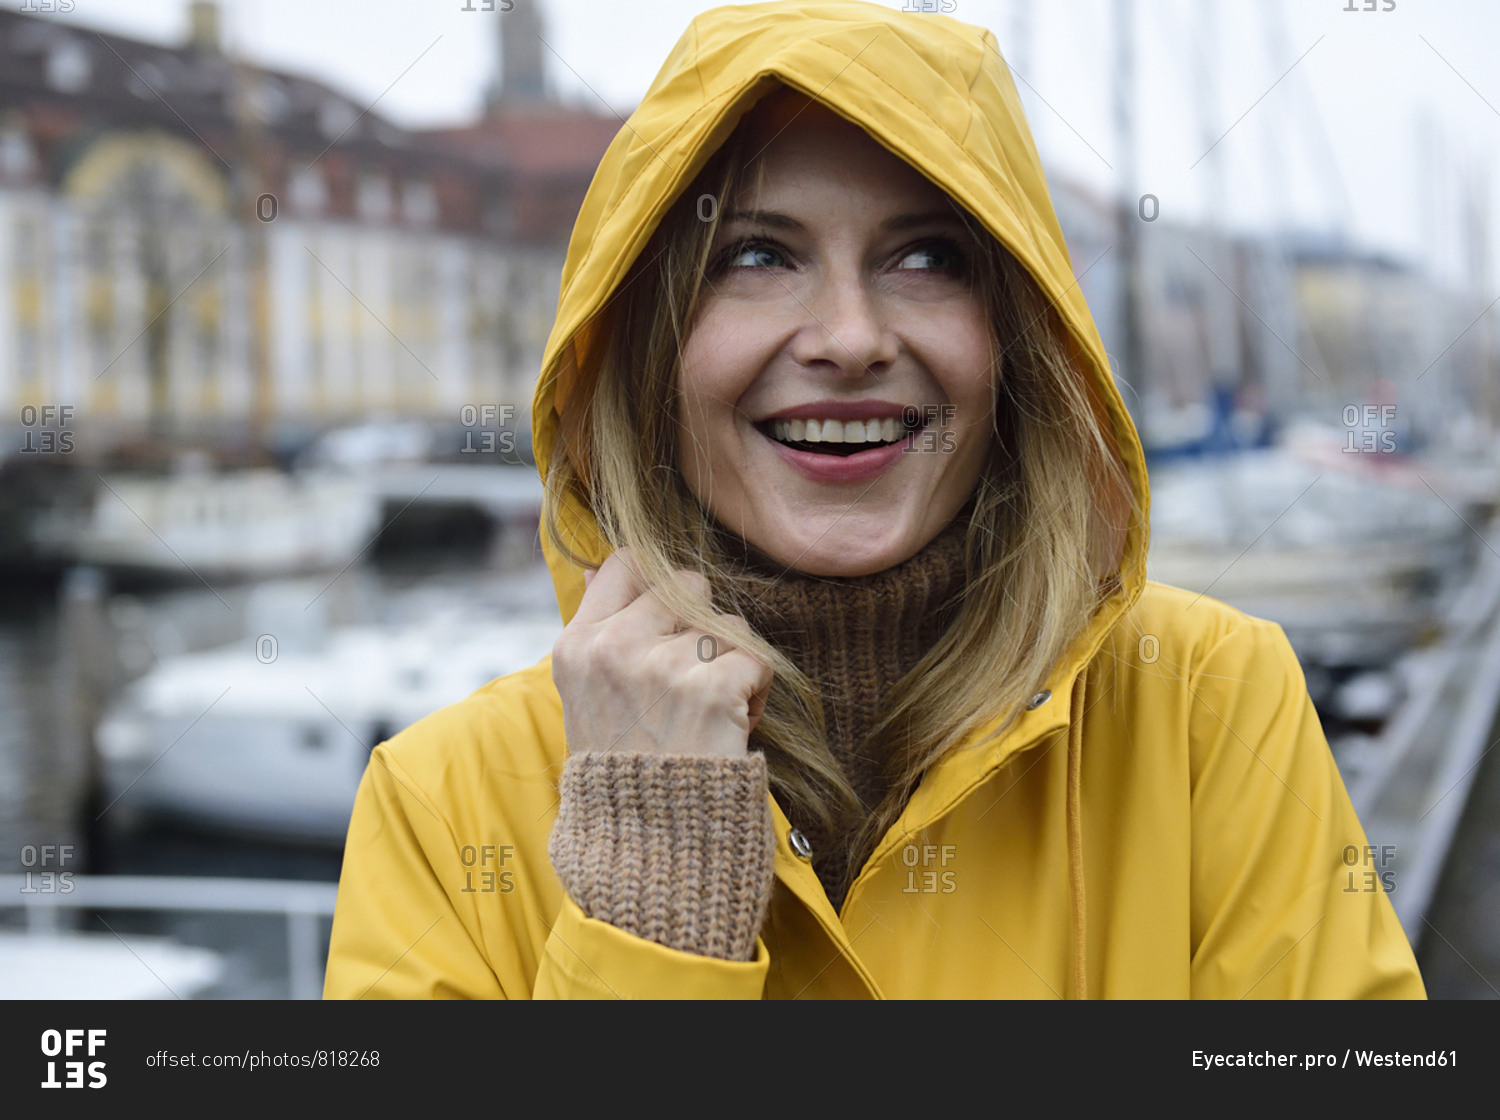 Denmark- Copenhagen- portrait of happy woman at city harbor in rainy weather